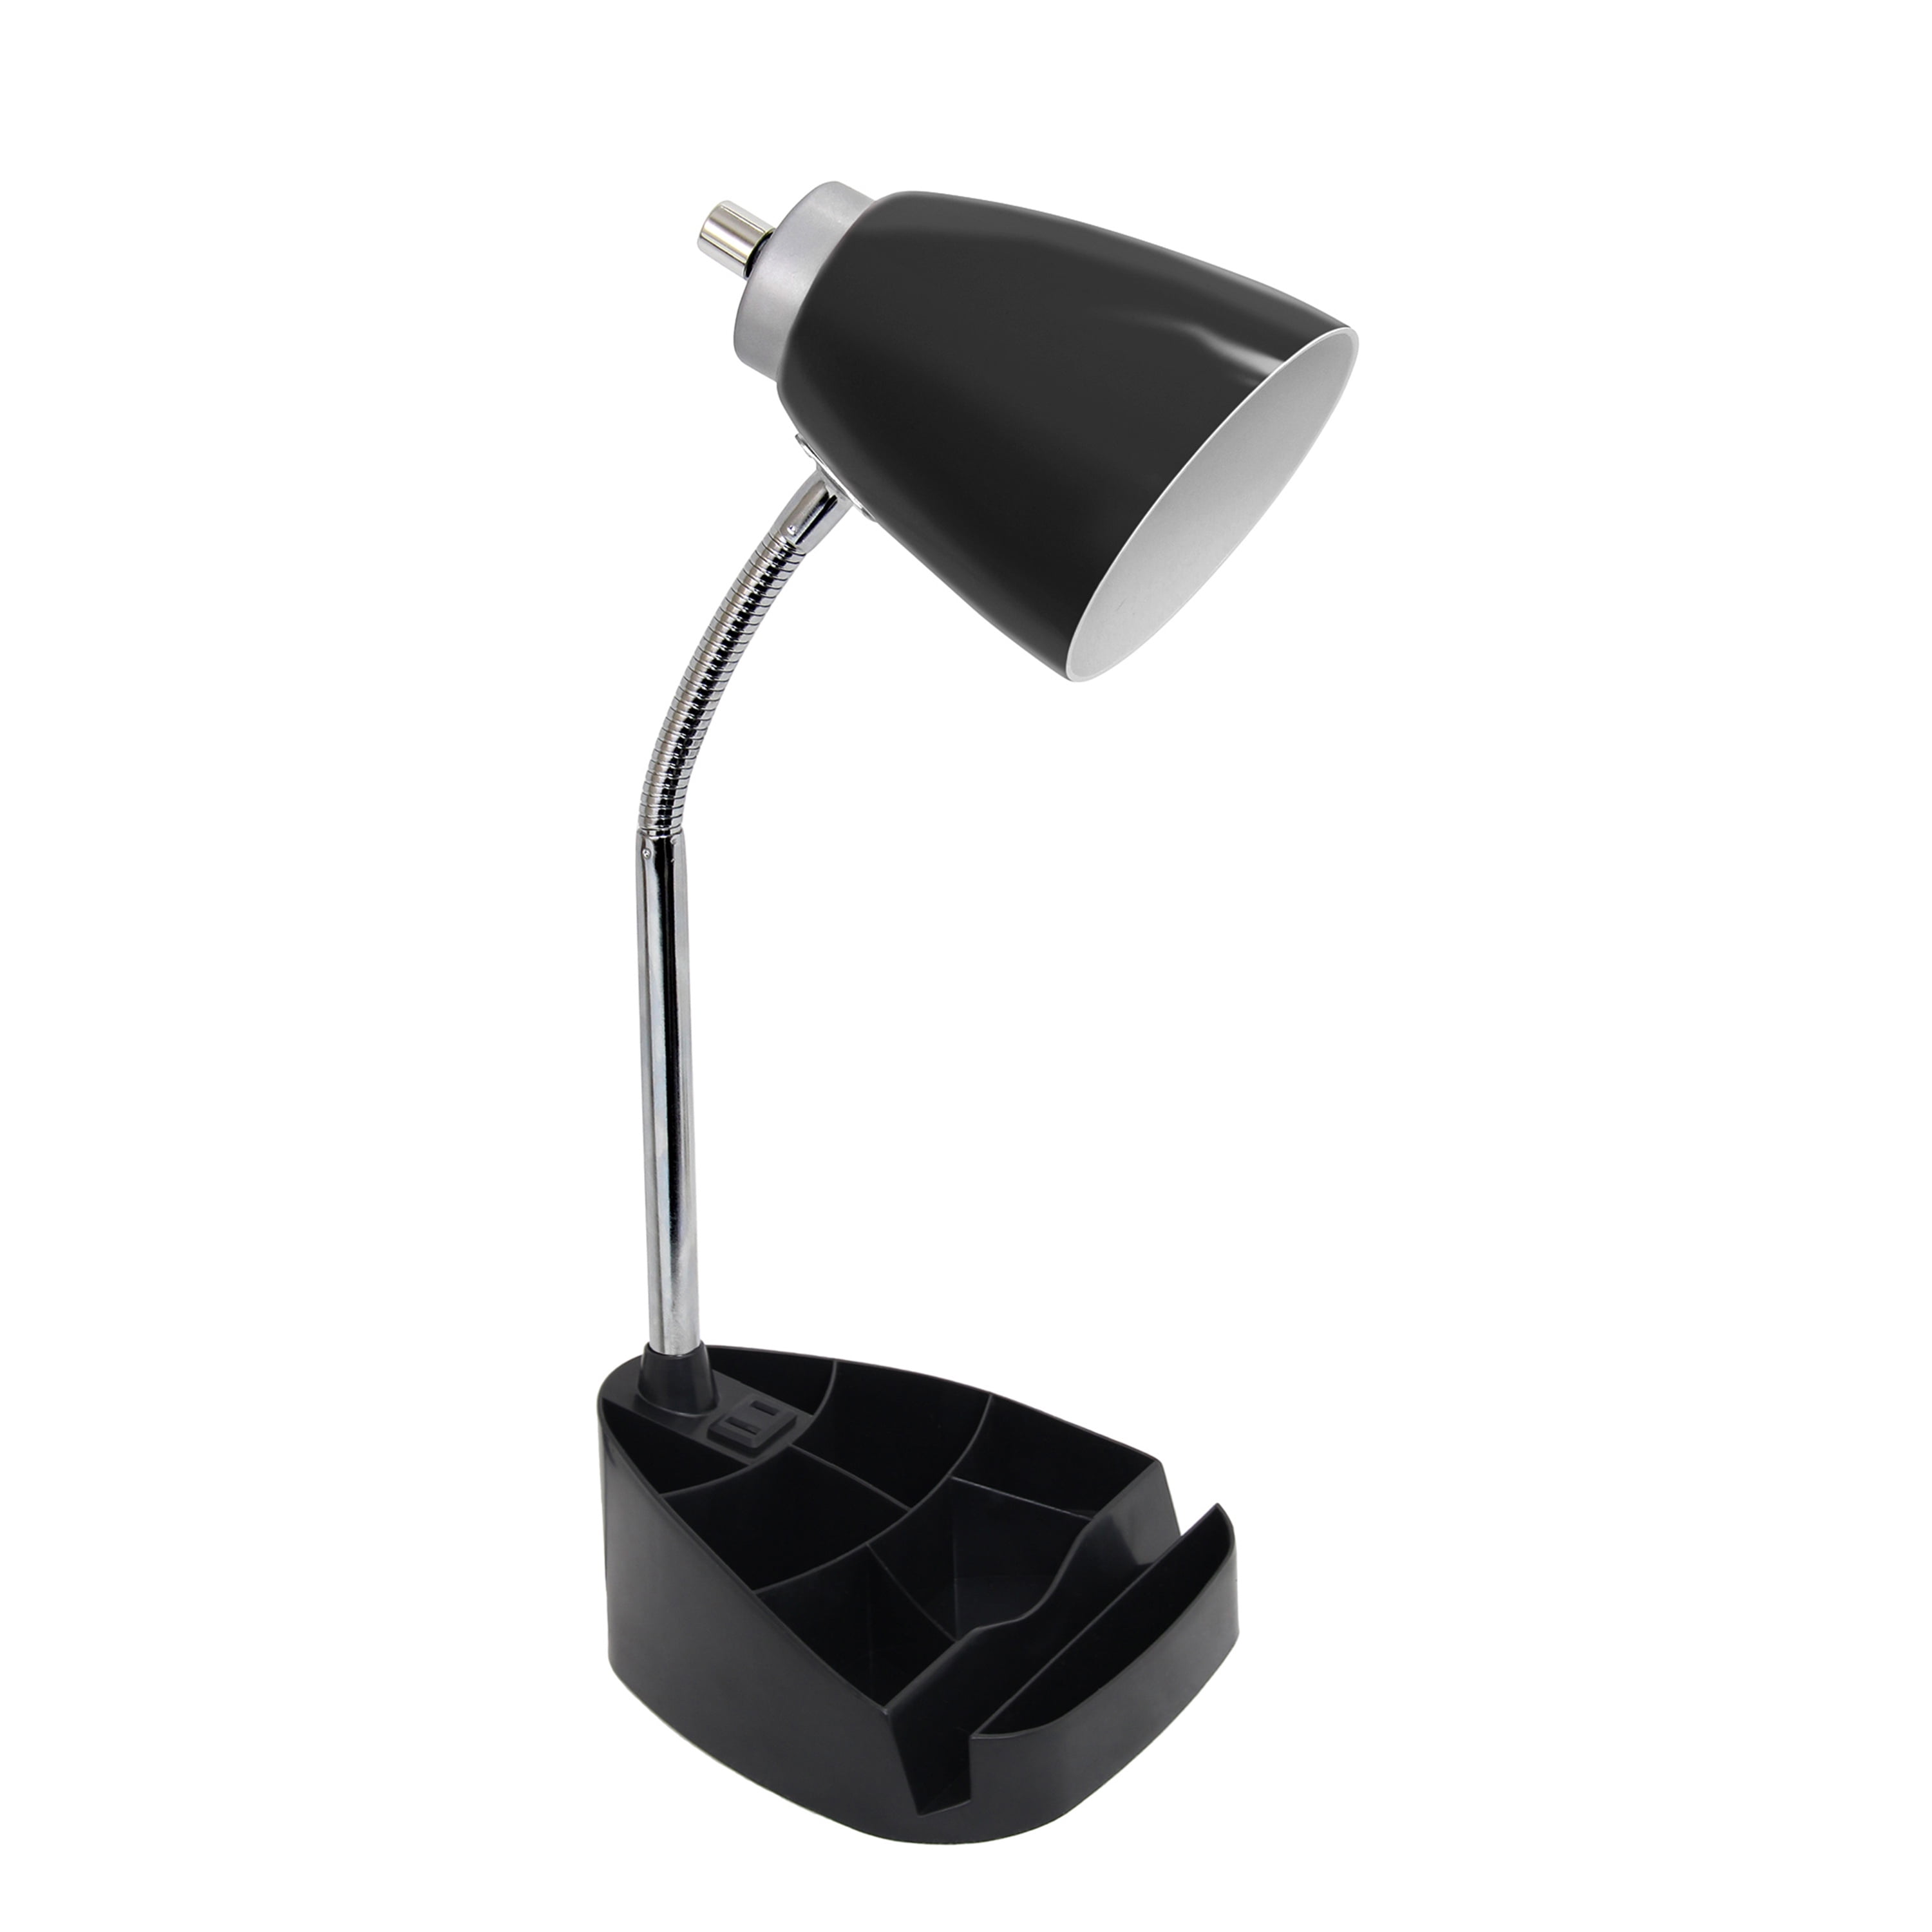 Ld1057-blk Gooseneck Organizer Desk Lamp With Ipad Tablet Stand Book Holder & Charging Outlet, Black